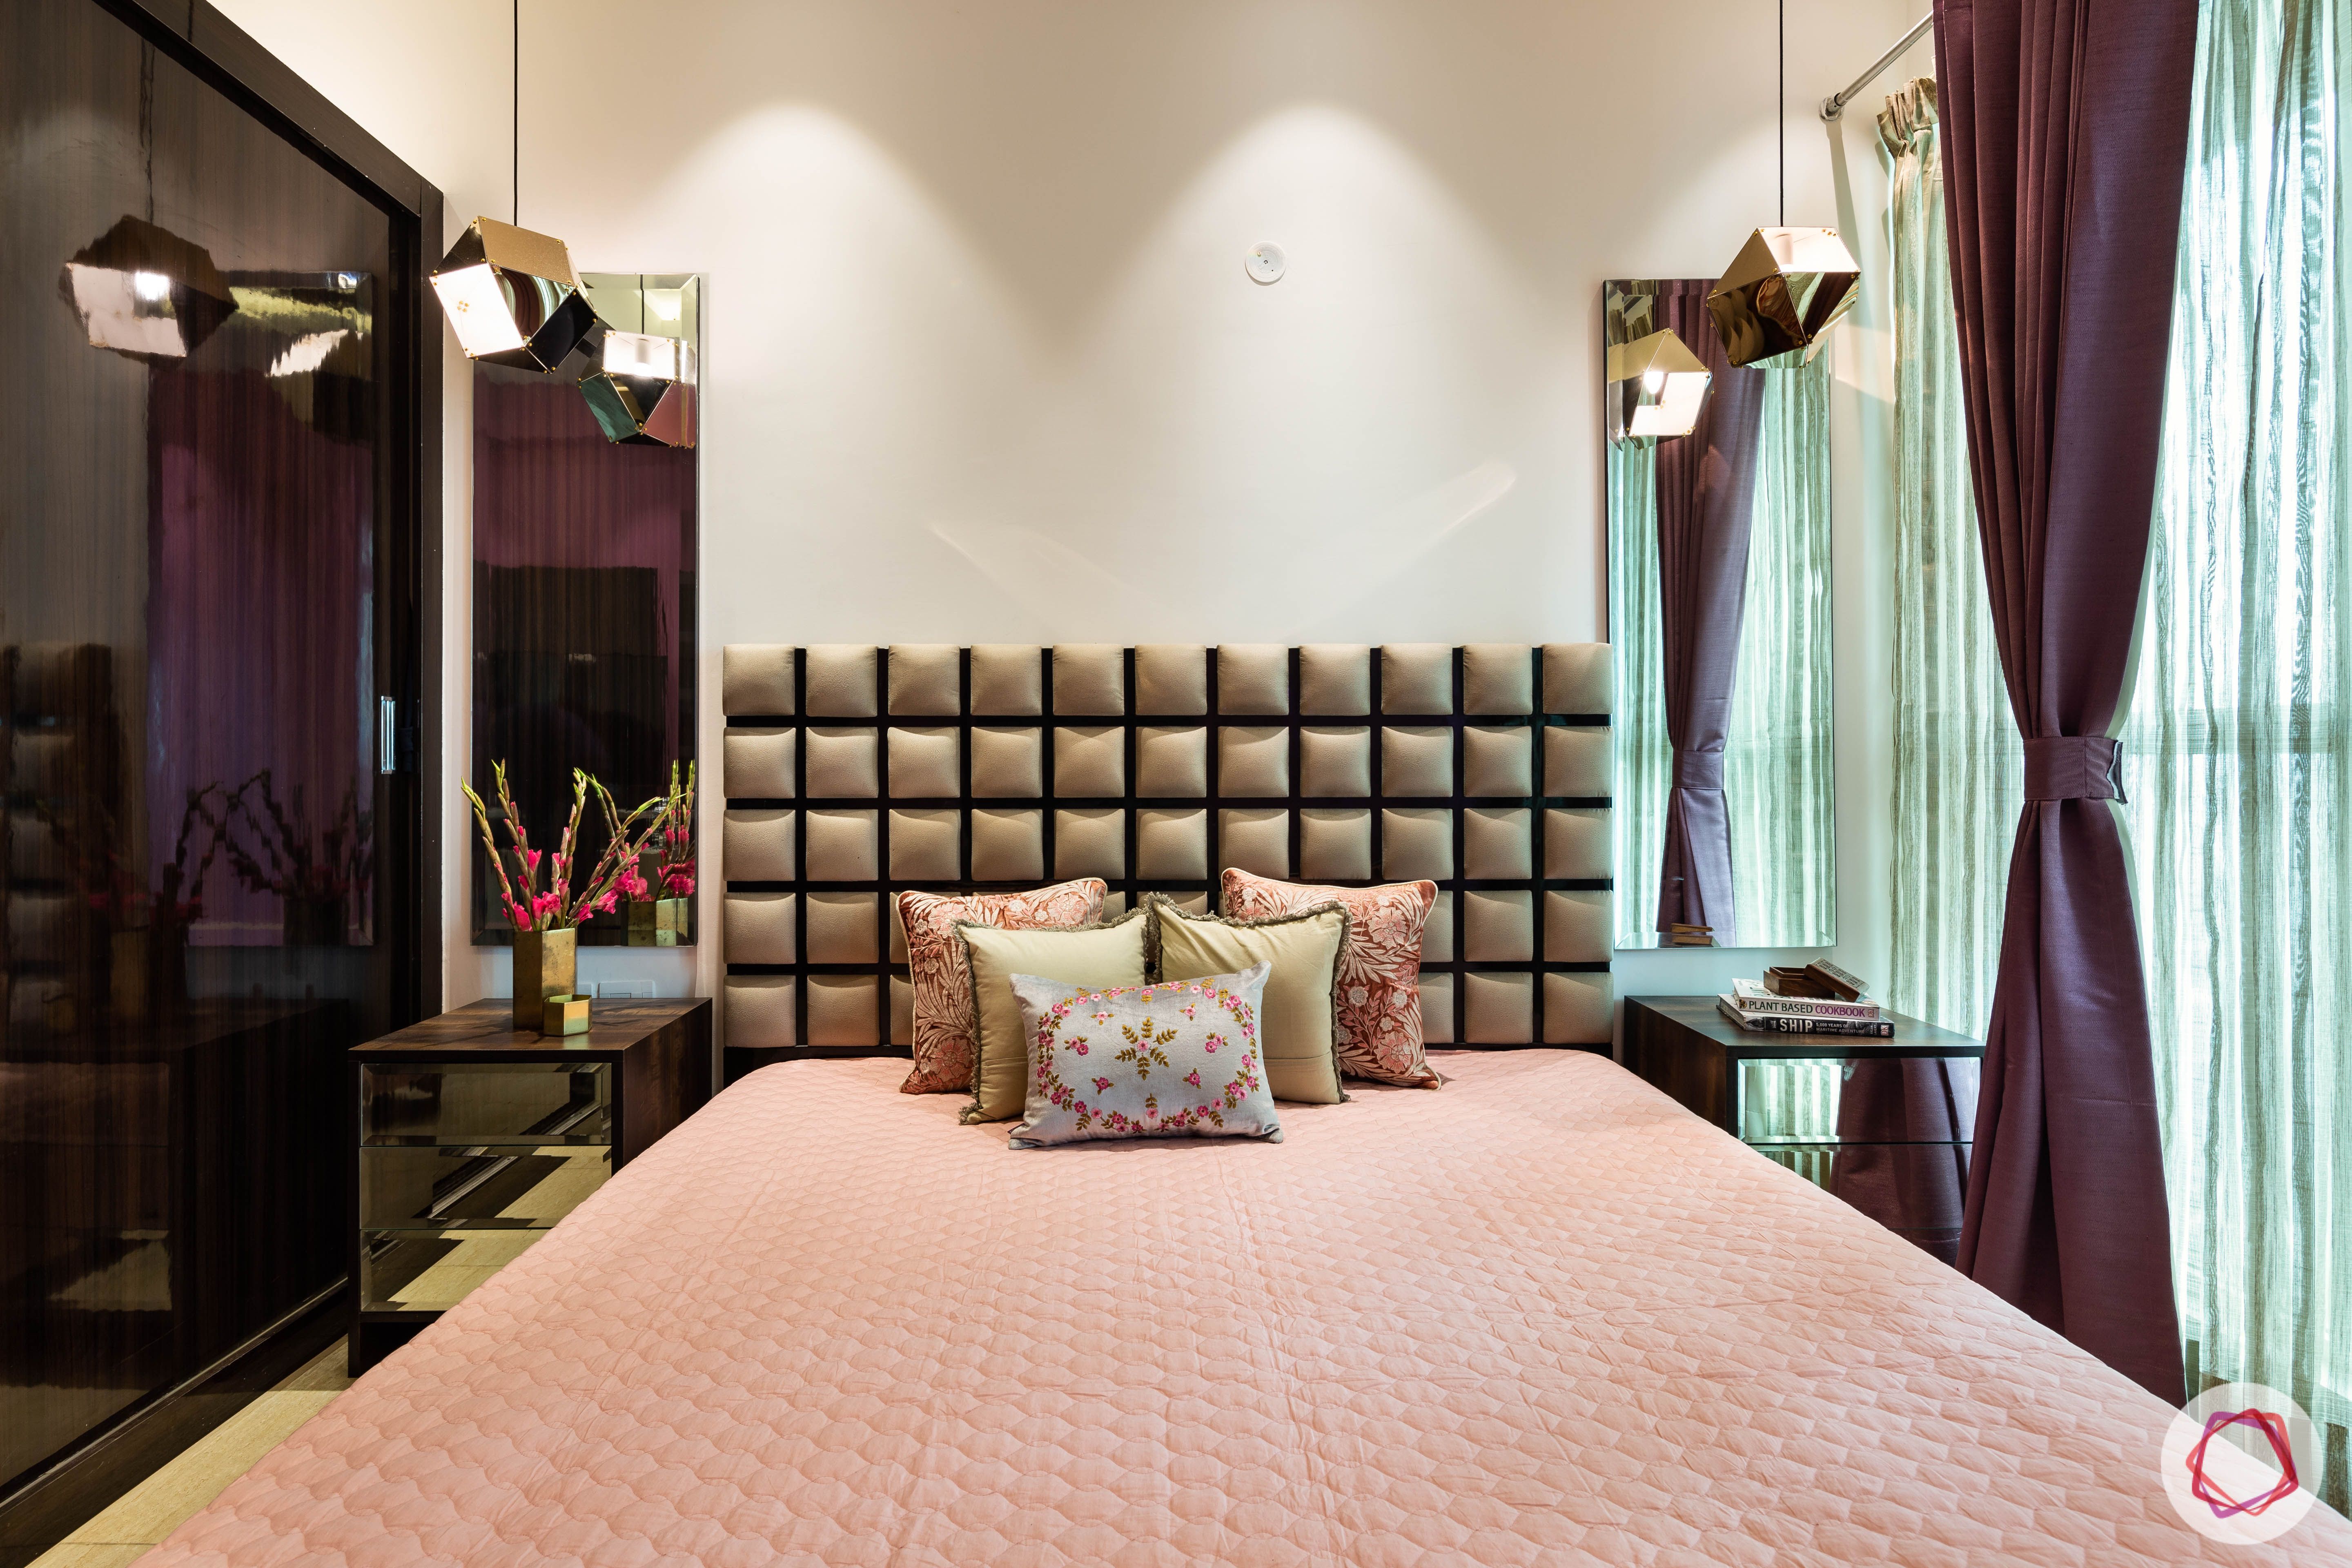 3 bhk flat-bedroom-bed-upholstered headboard-pendant lights-curtains